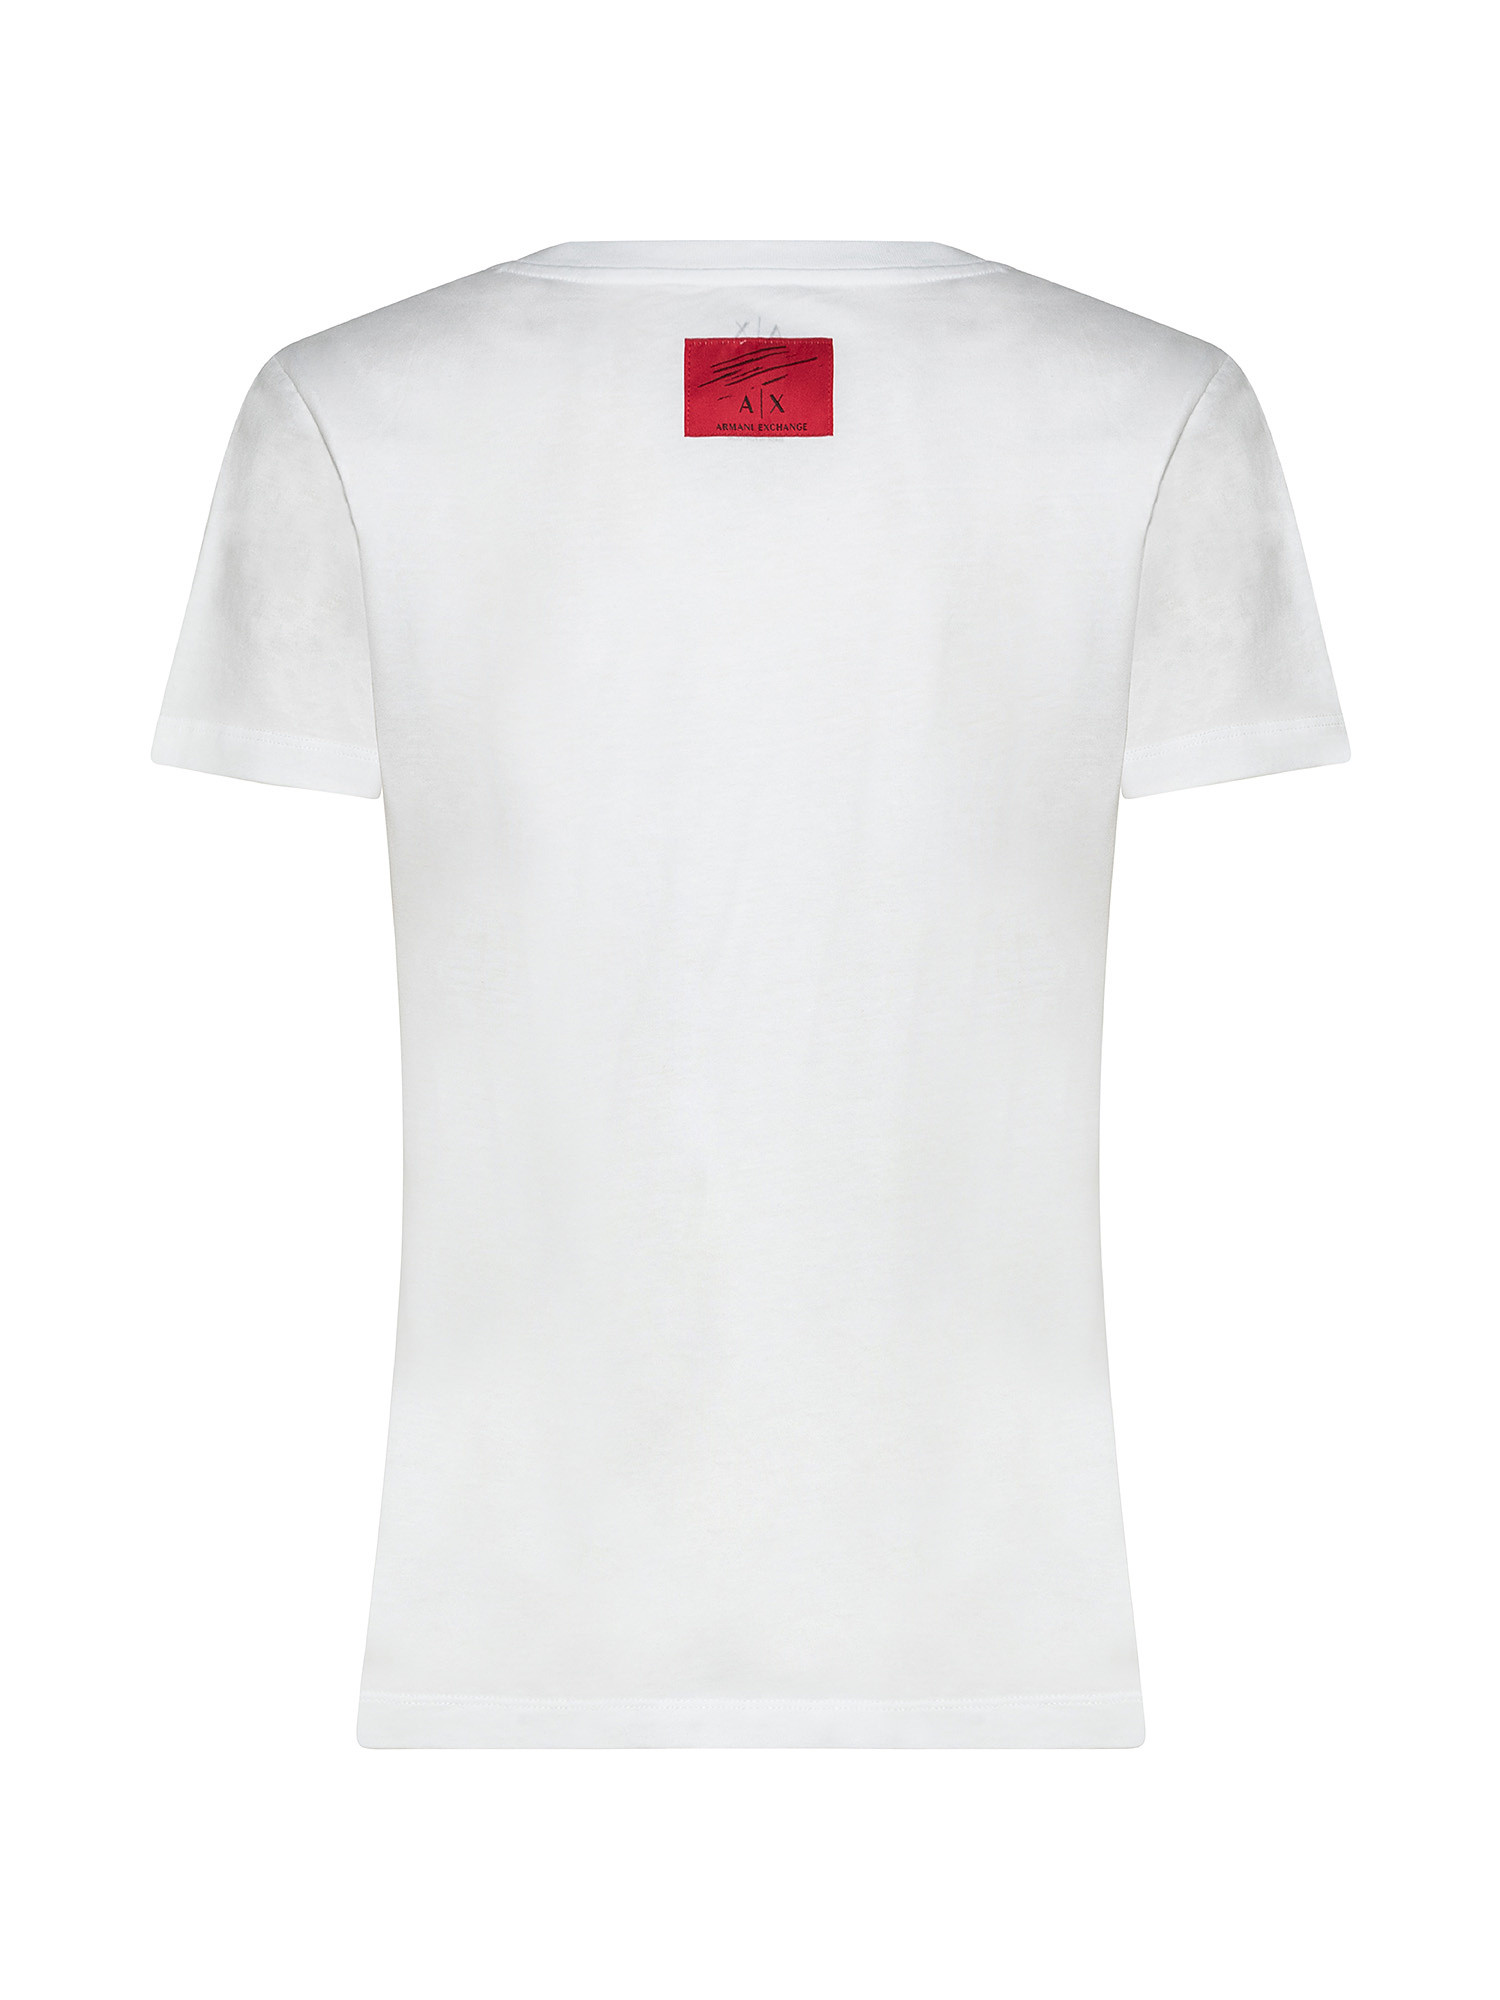 T- shirt con logo, Bianco, large